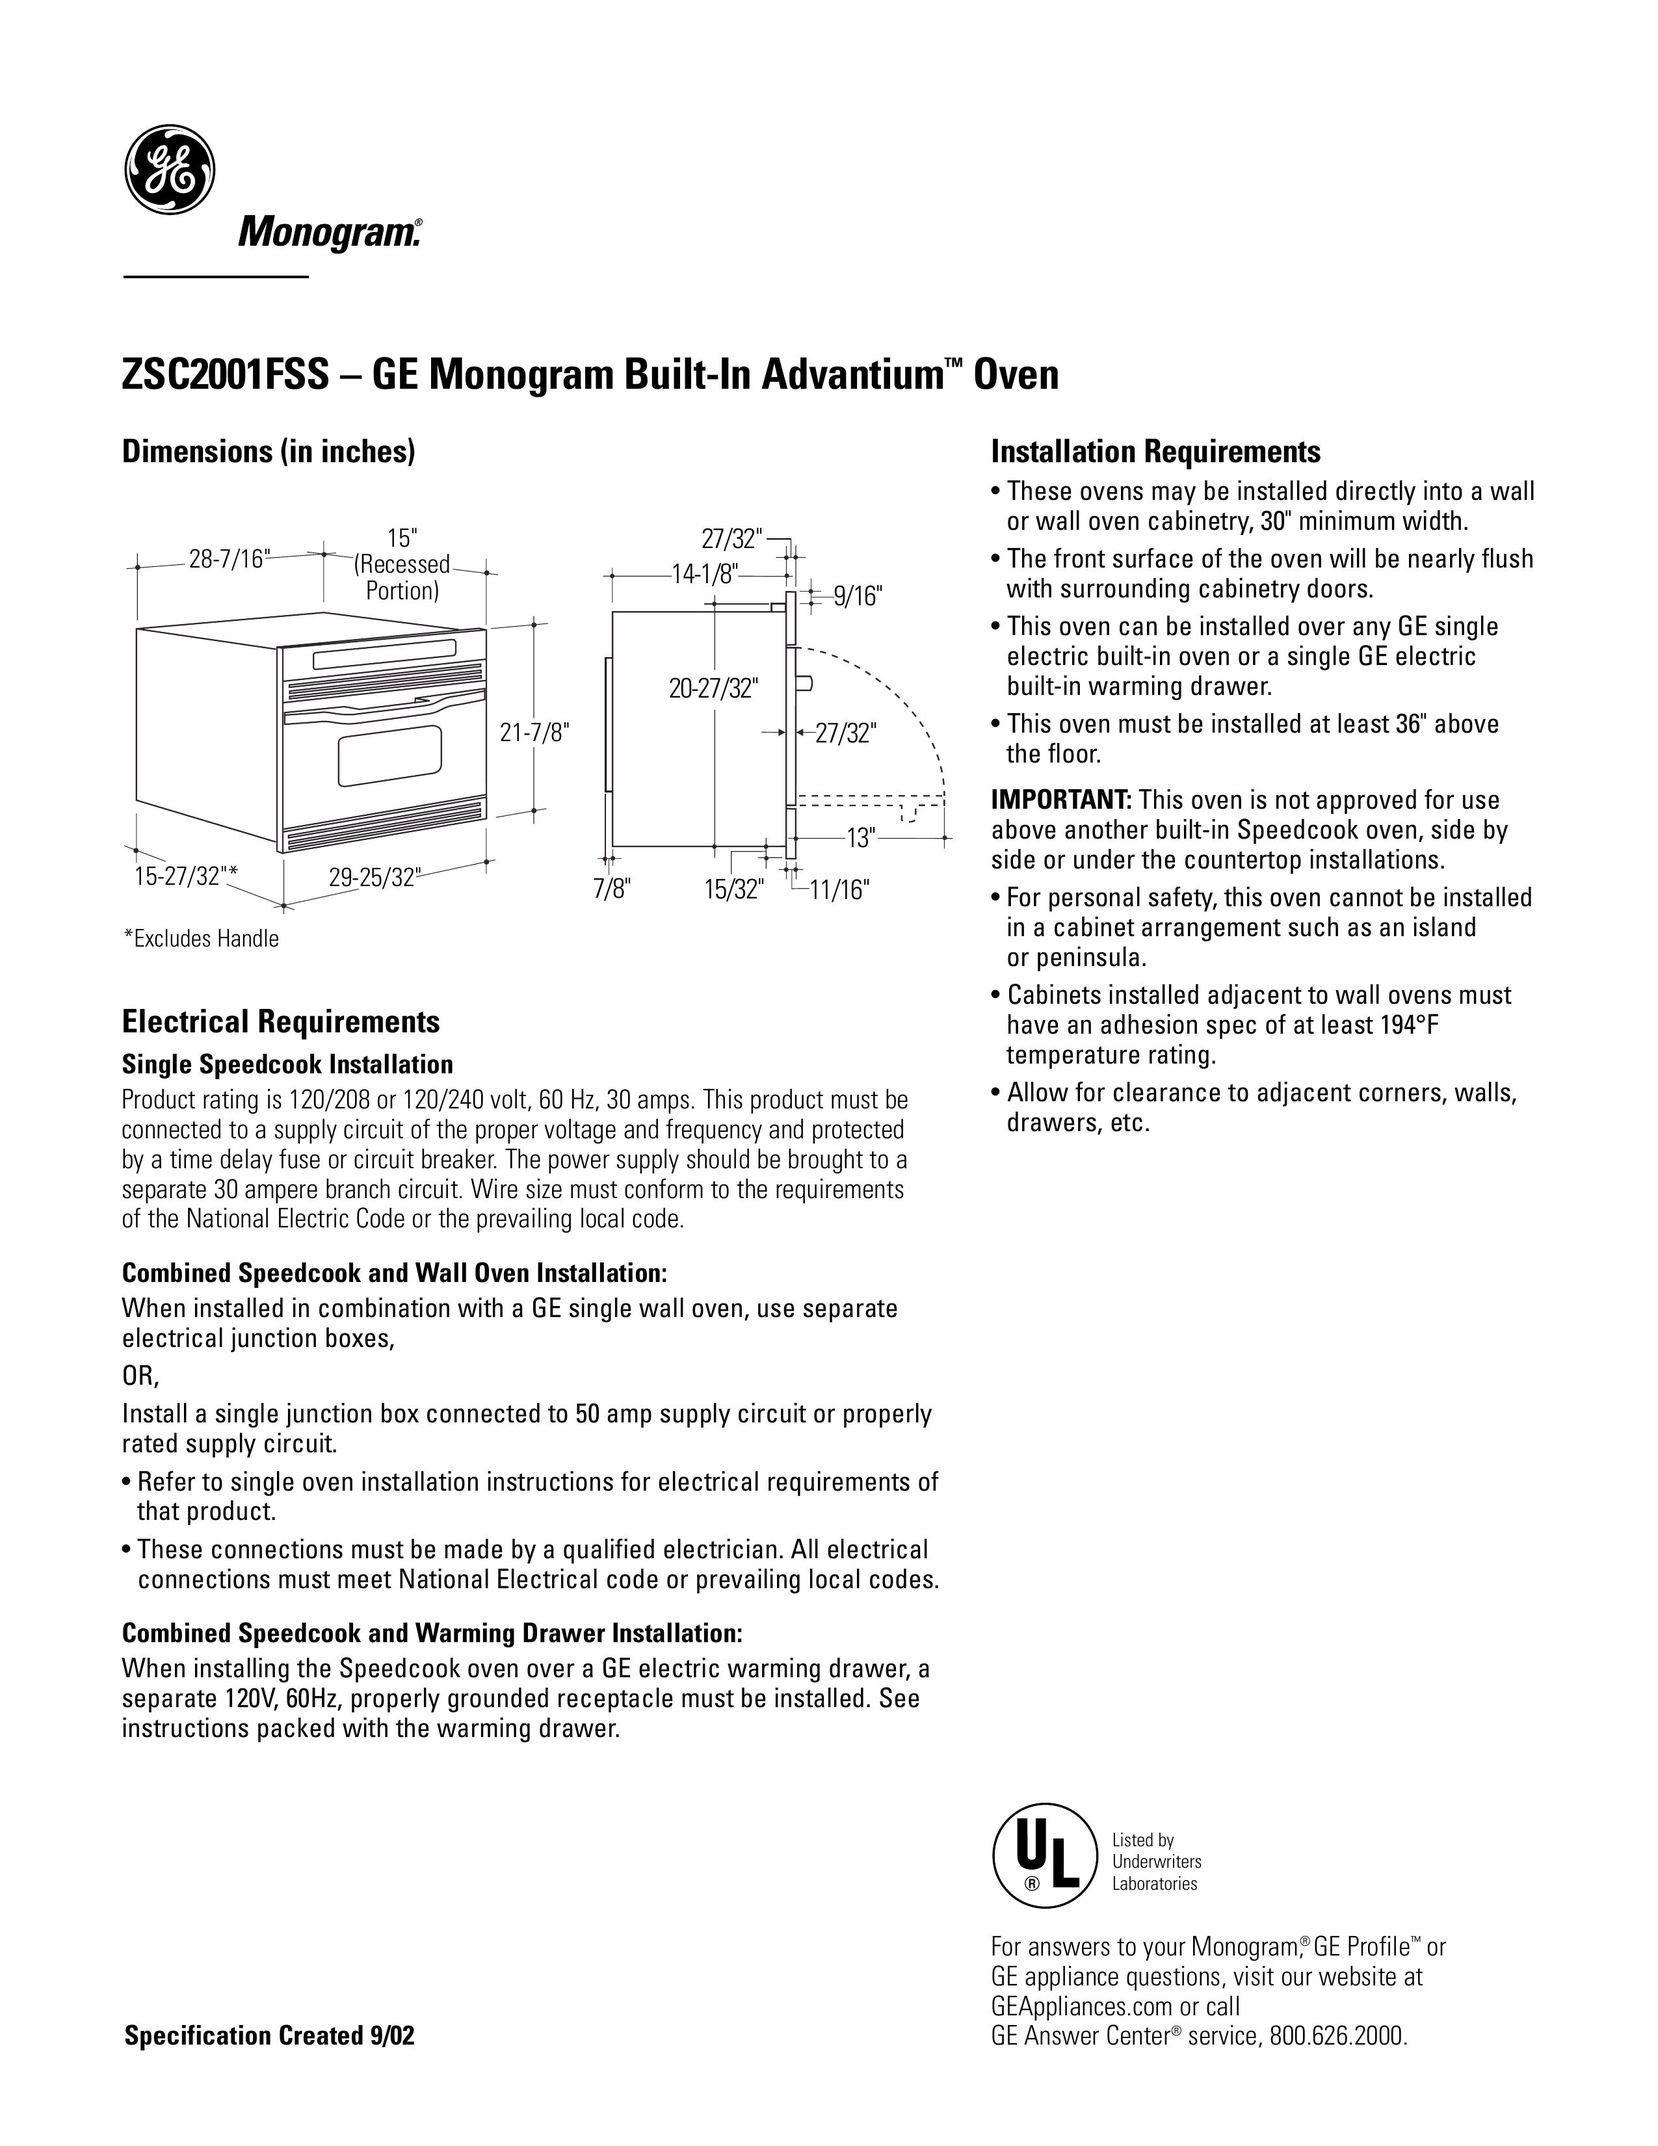 GE Monogram ZSC2001FSS Computer Drive User Manual